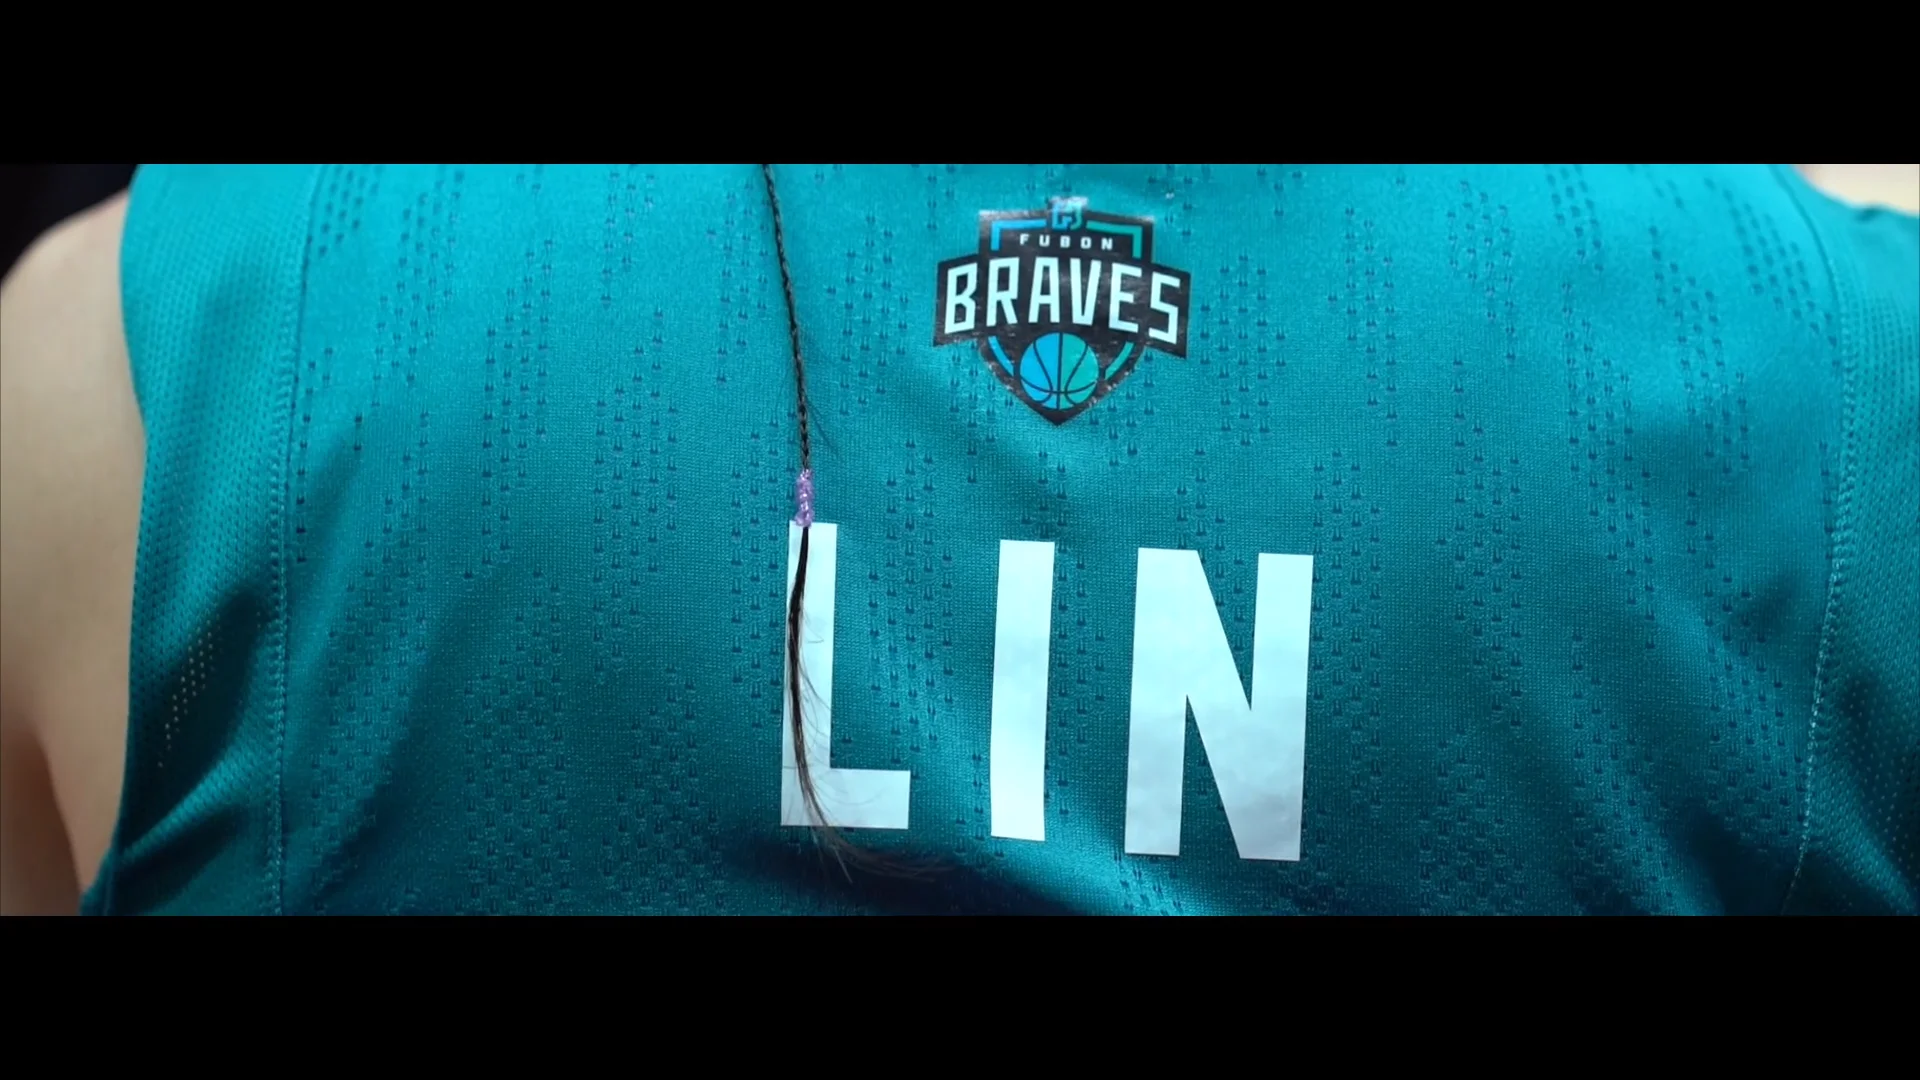 Joseph Lin Fubon Braves Feature  富邦勇士林書緯籃球特輯on Vimeo